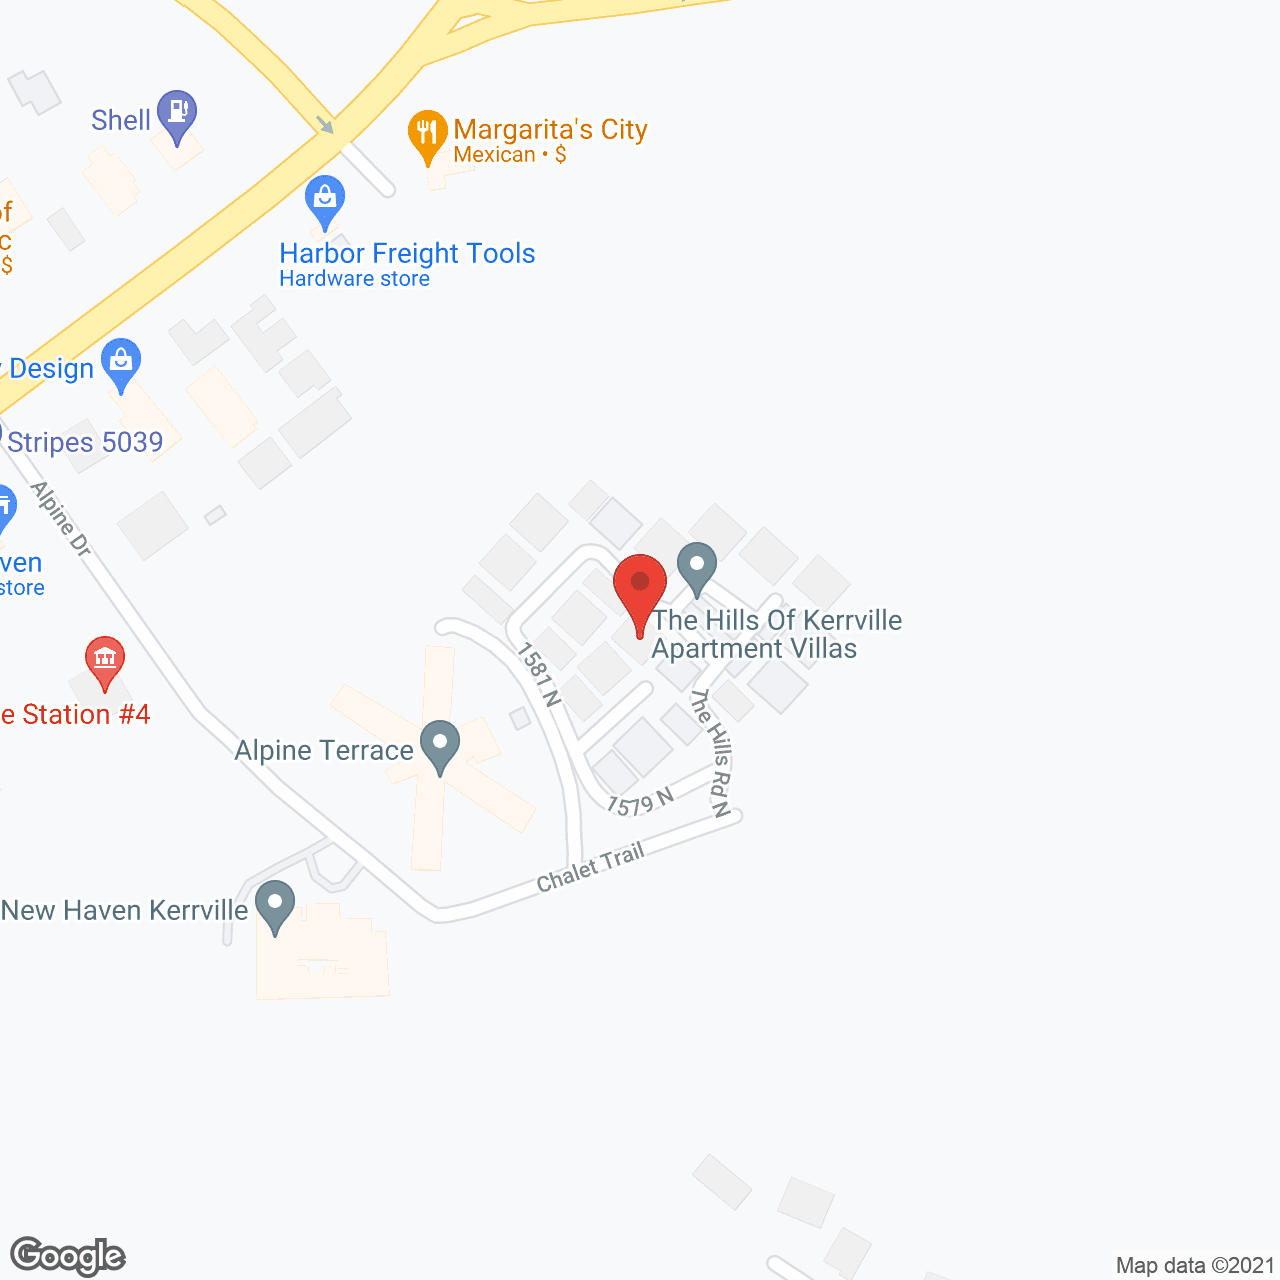 Hills of Kerrville Apt Villas in google map